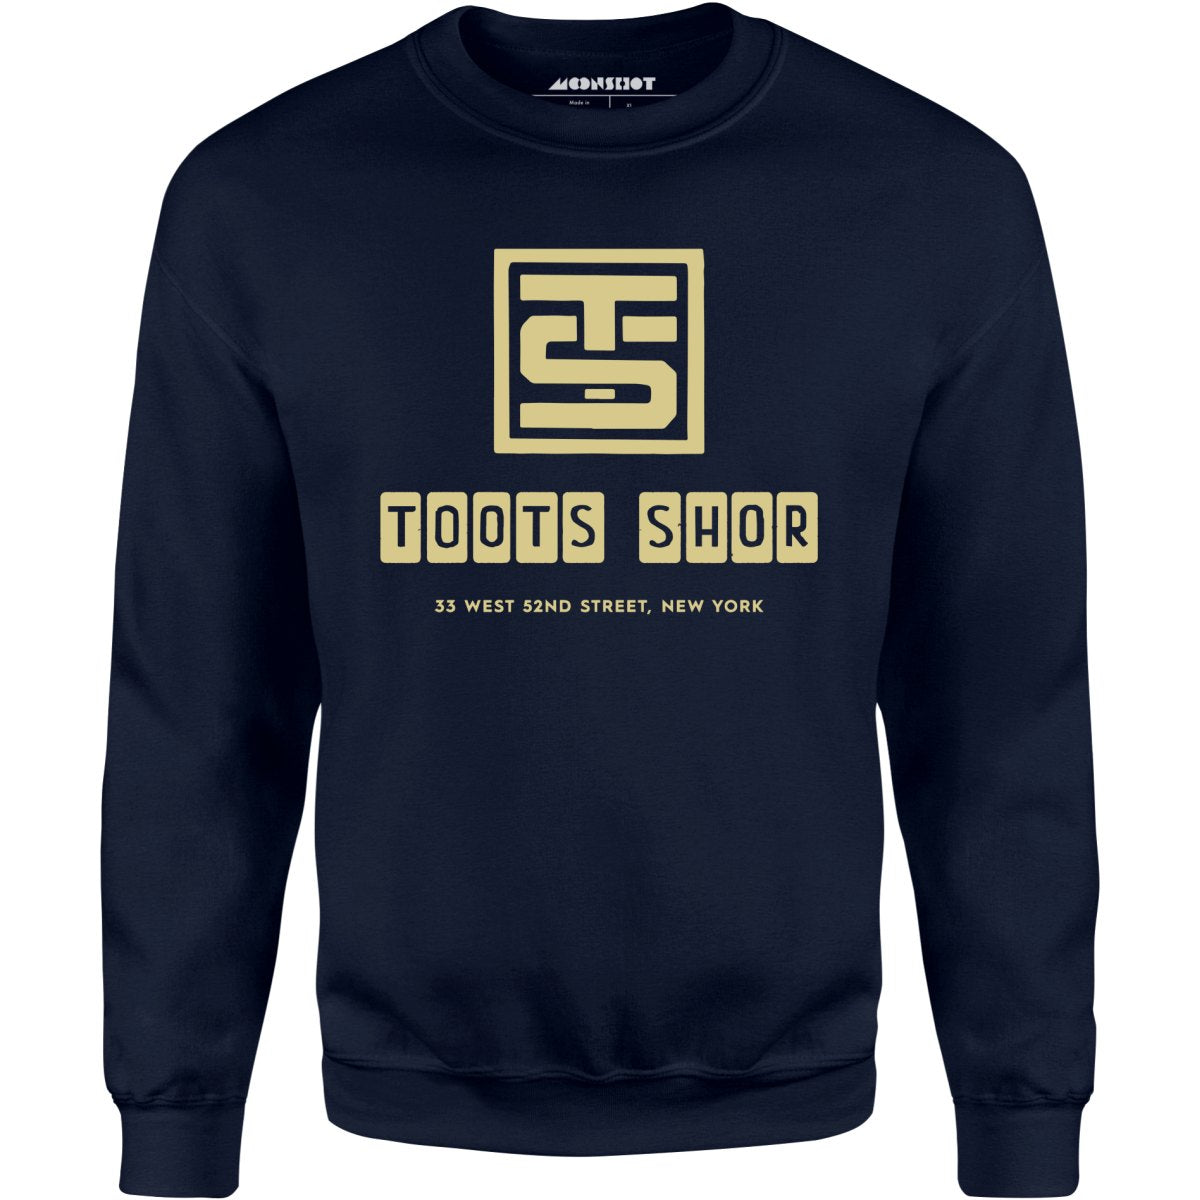 Toots Shor Logo - Manhattan, NY - Vintage Restaurant - Unisex Sweatshirt